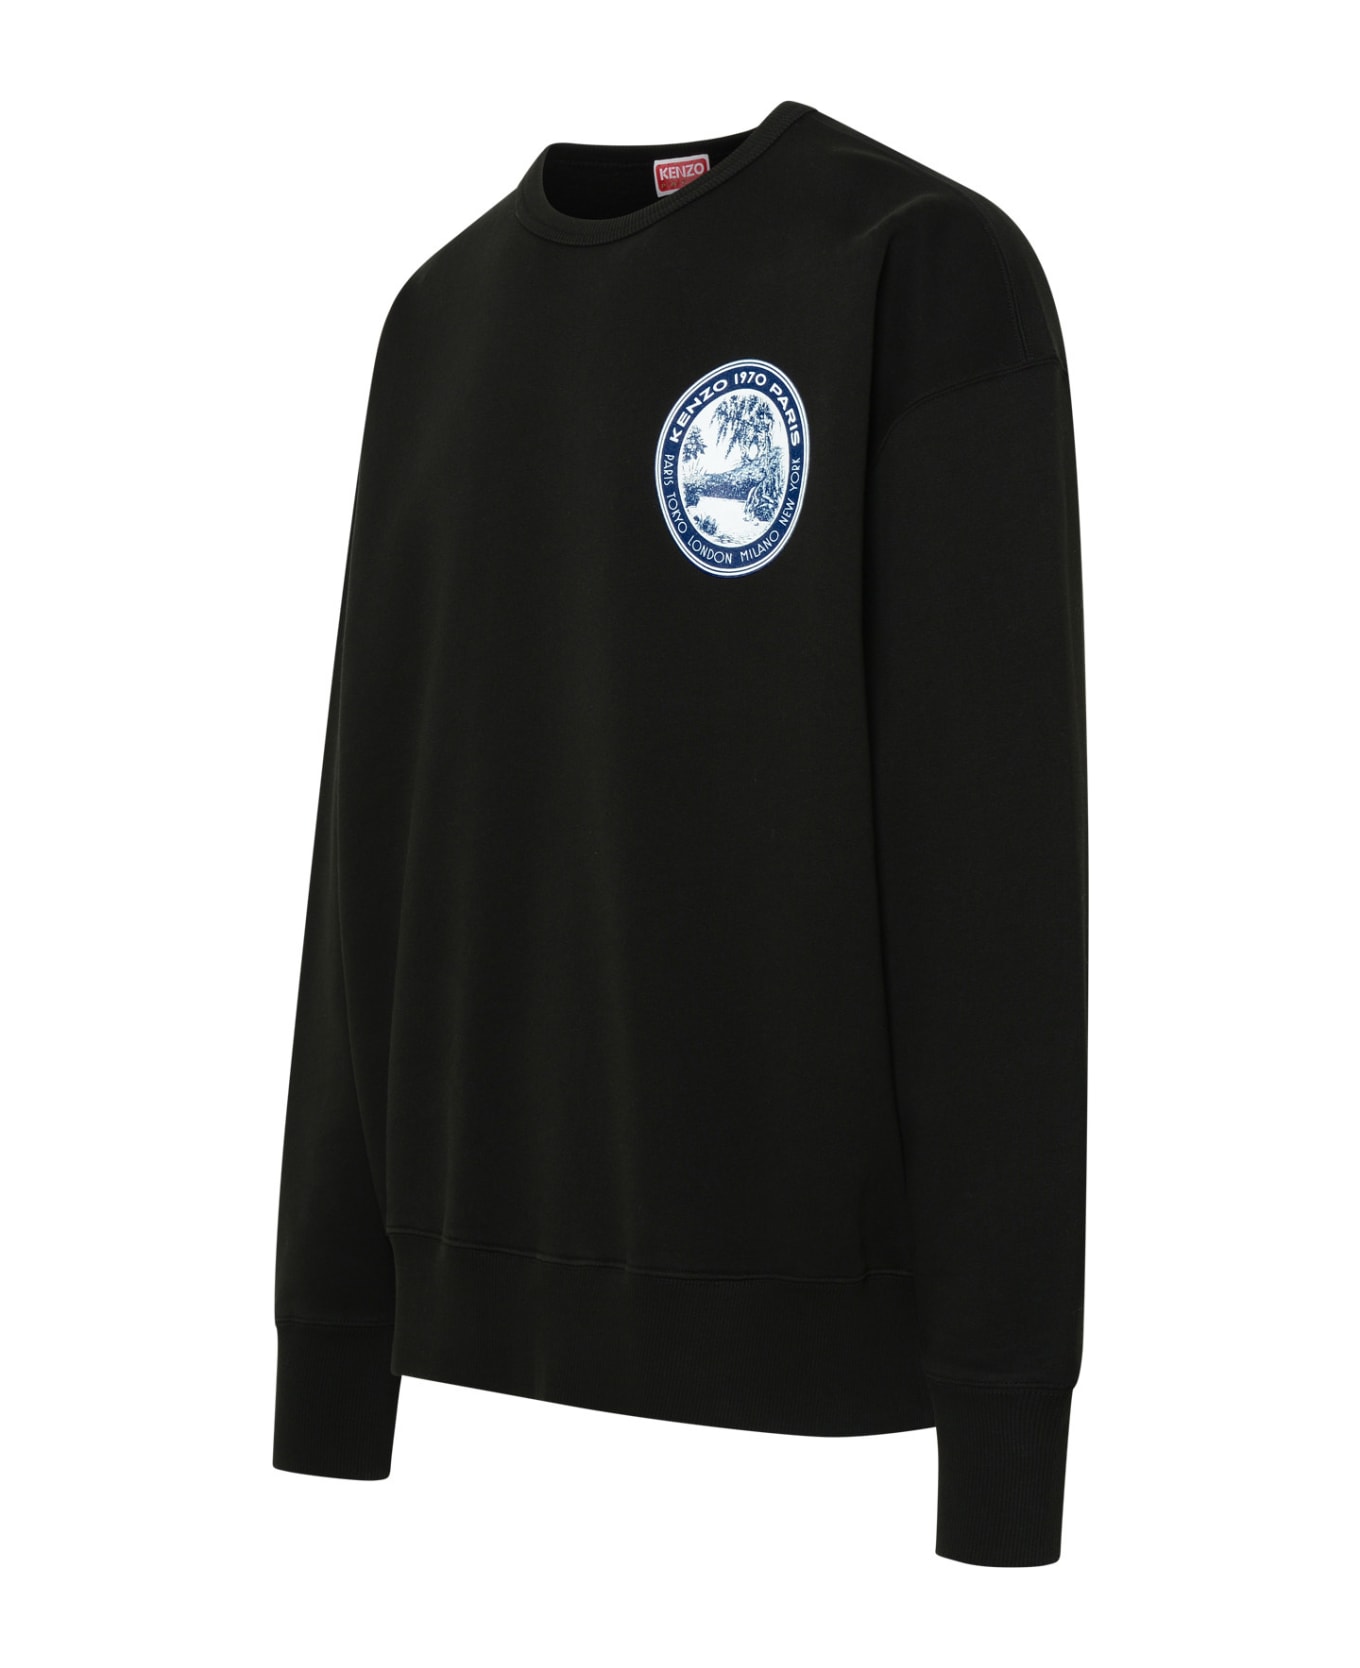 Kenzo Black Cotton Sweatshirt - Black フリース